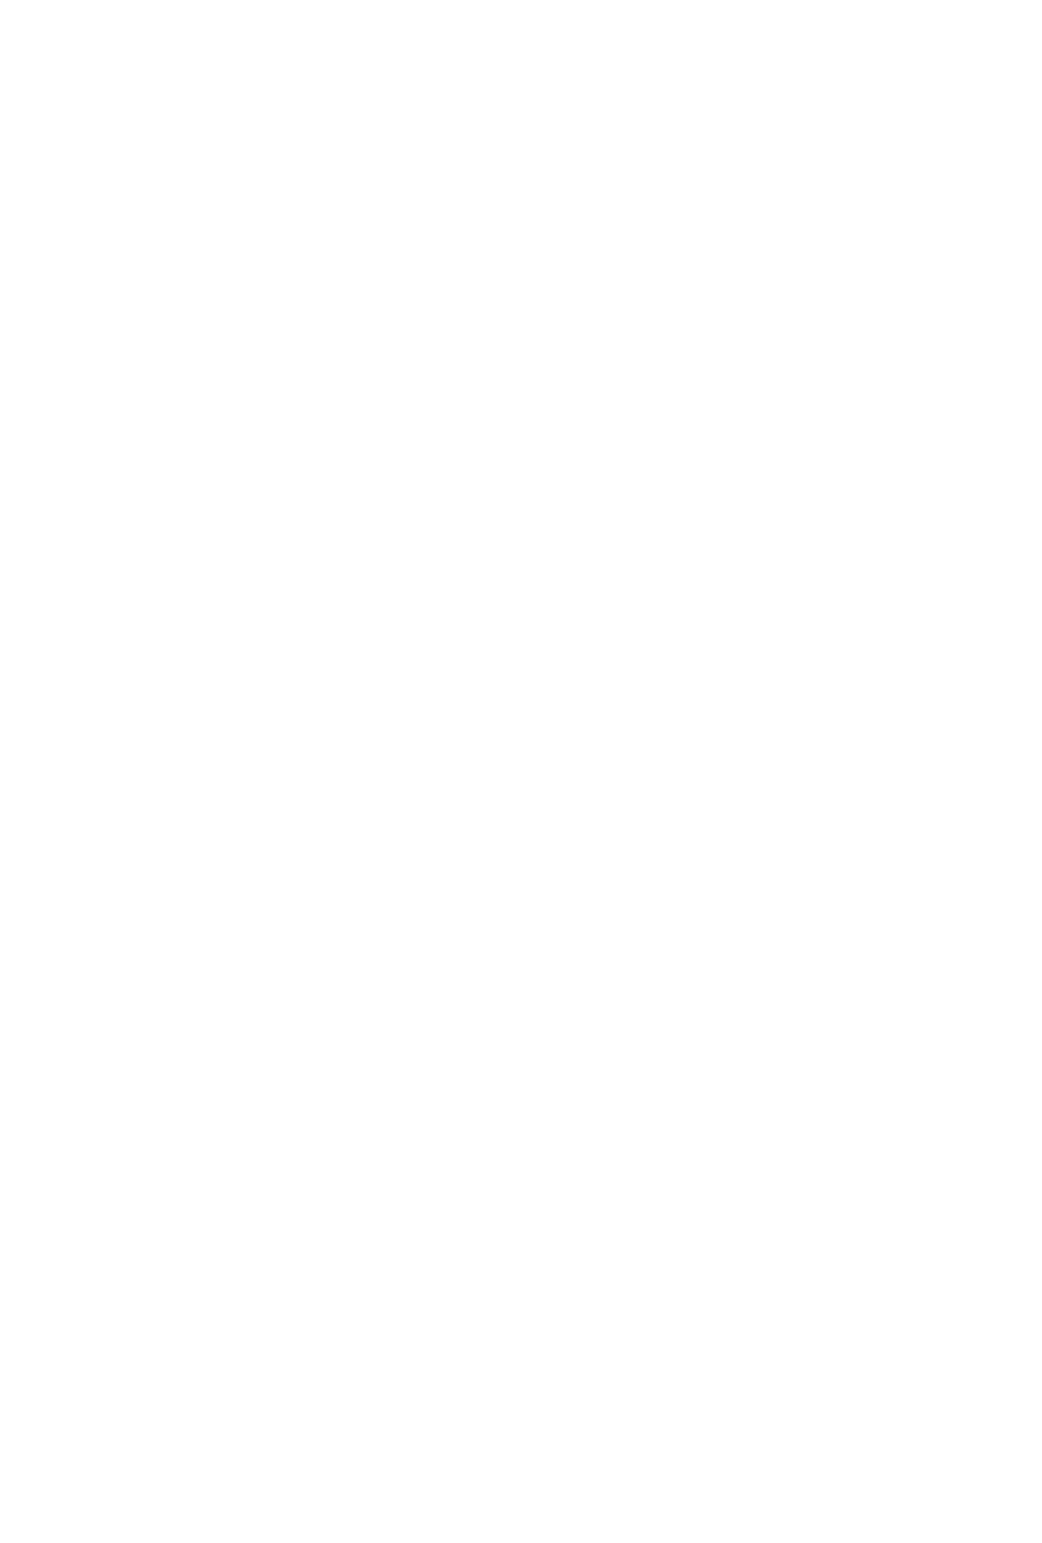 Swiggy logo for dark backgrounds (transparent PNG)